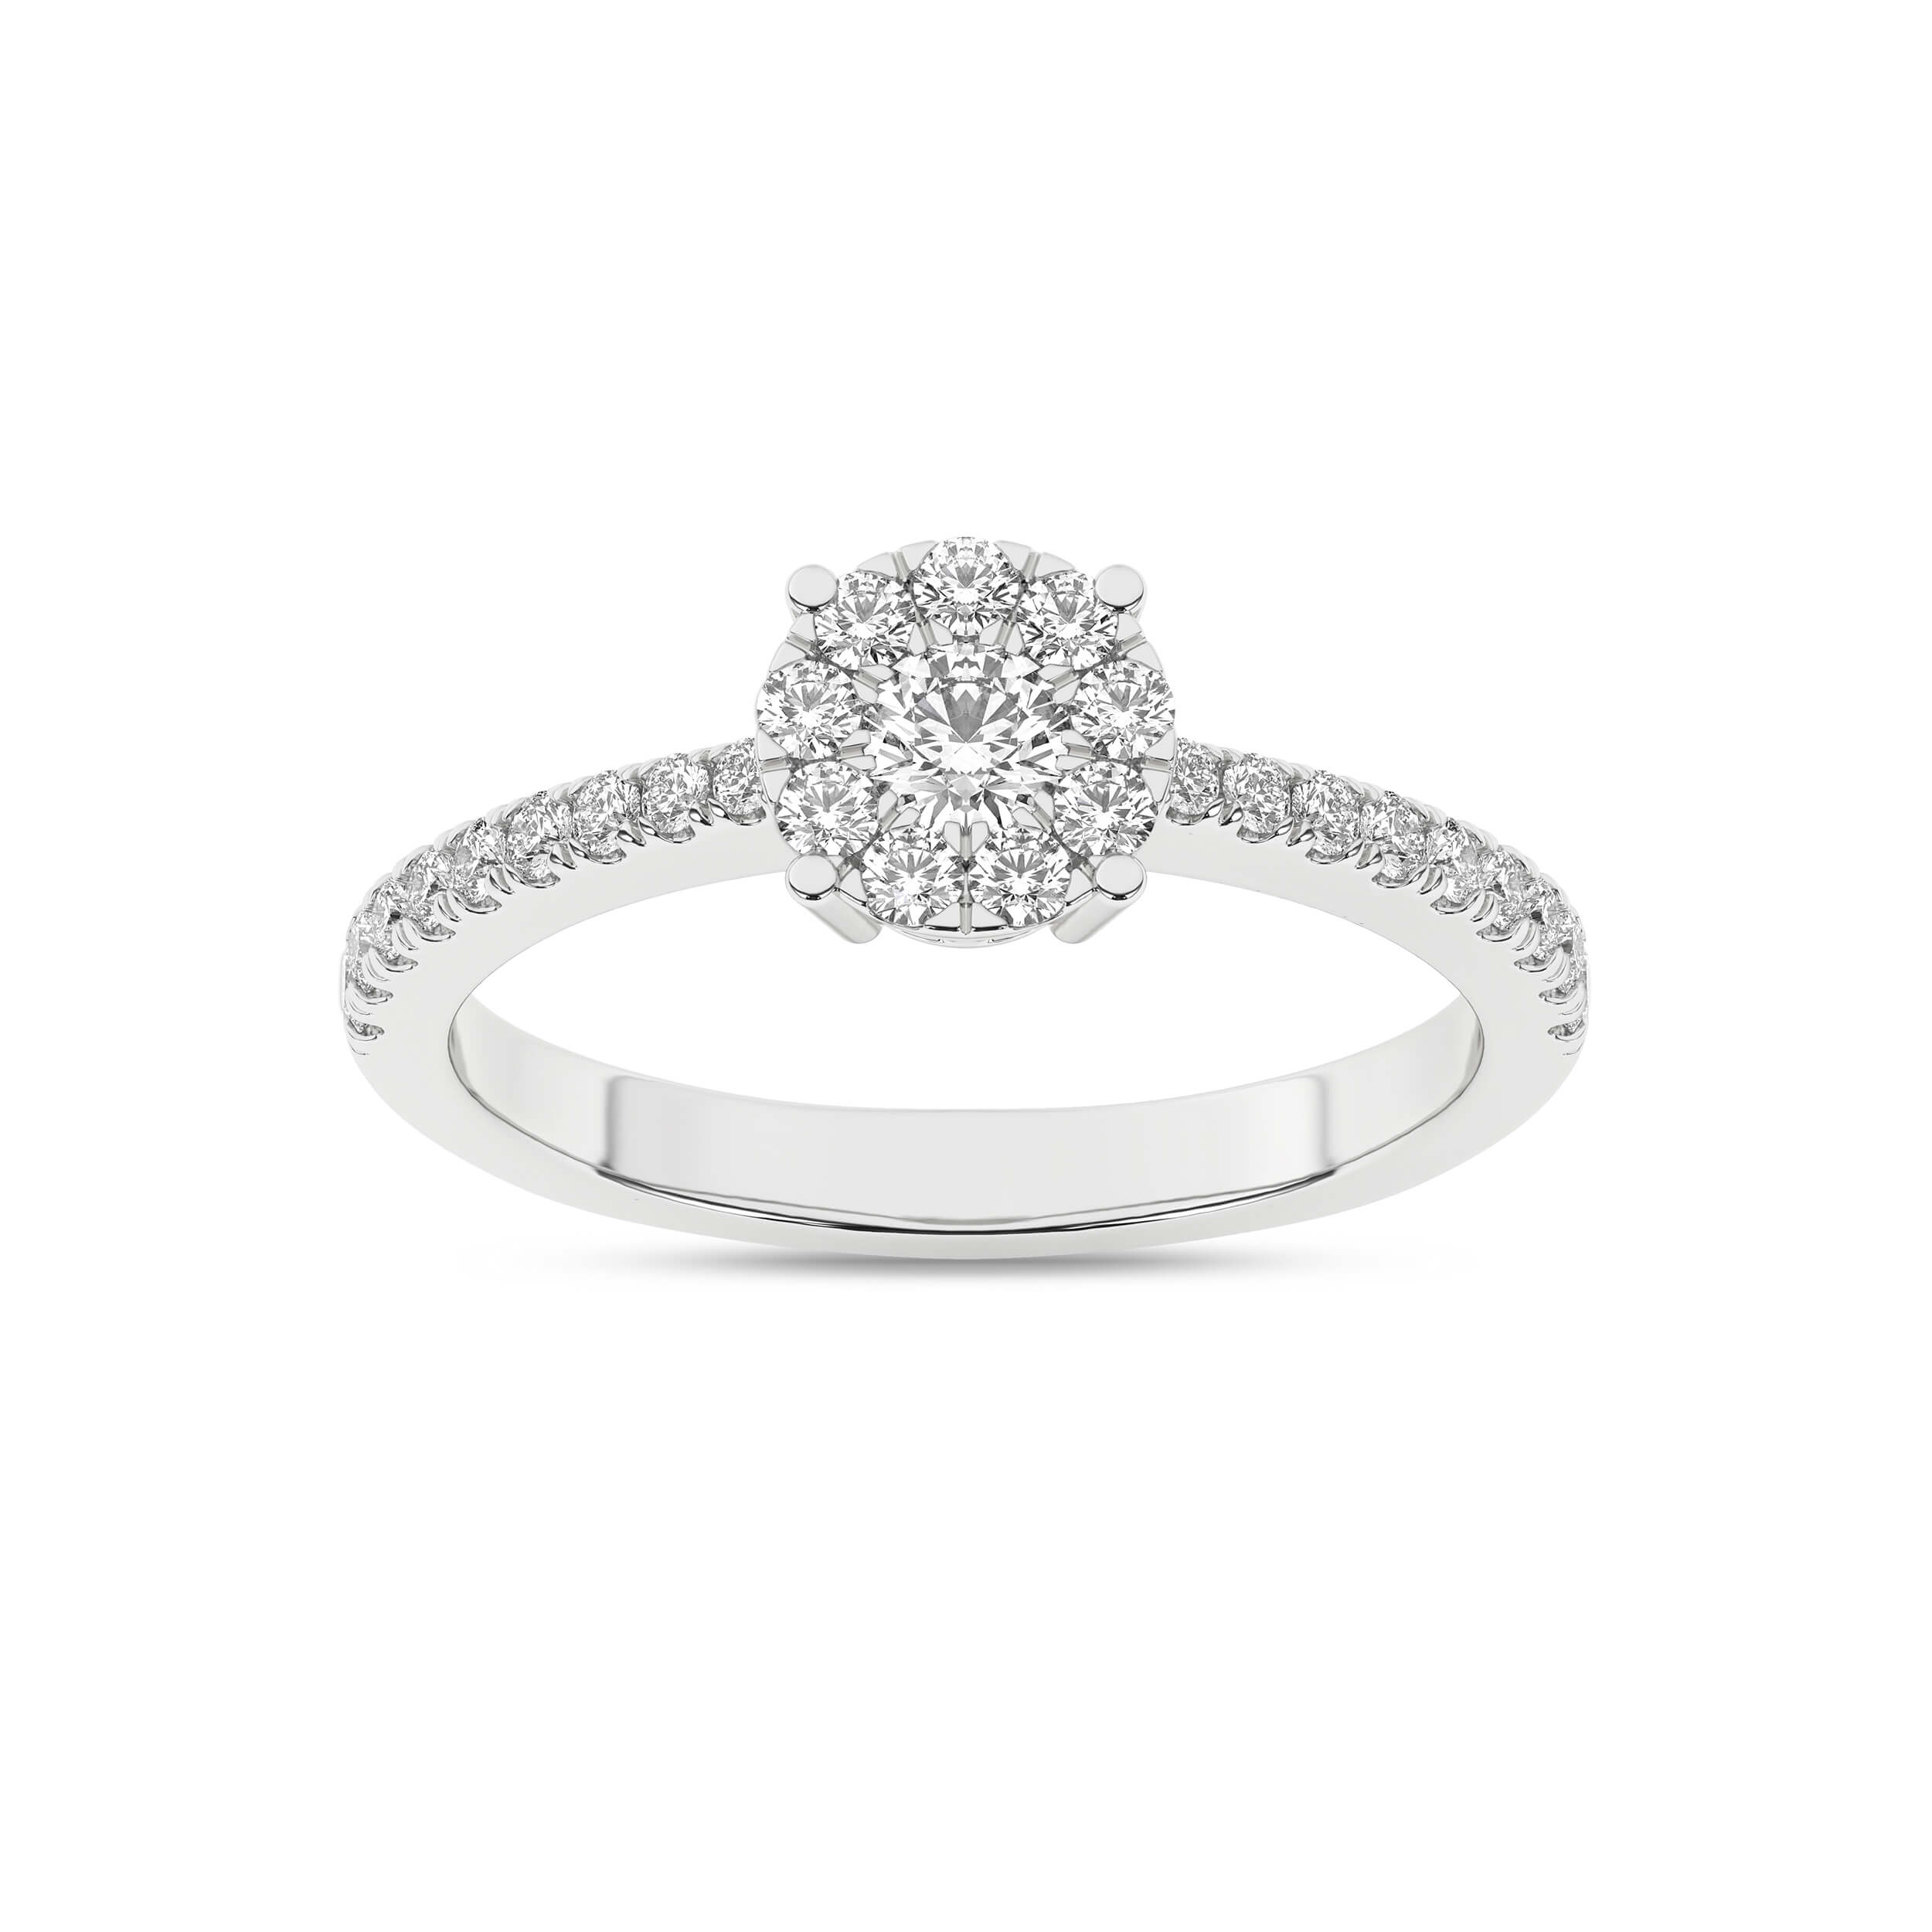 Inel de logodna din Aur Alb 14K cu Diamante 0.40Ct, articol RC4052, previzualizare foto 1